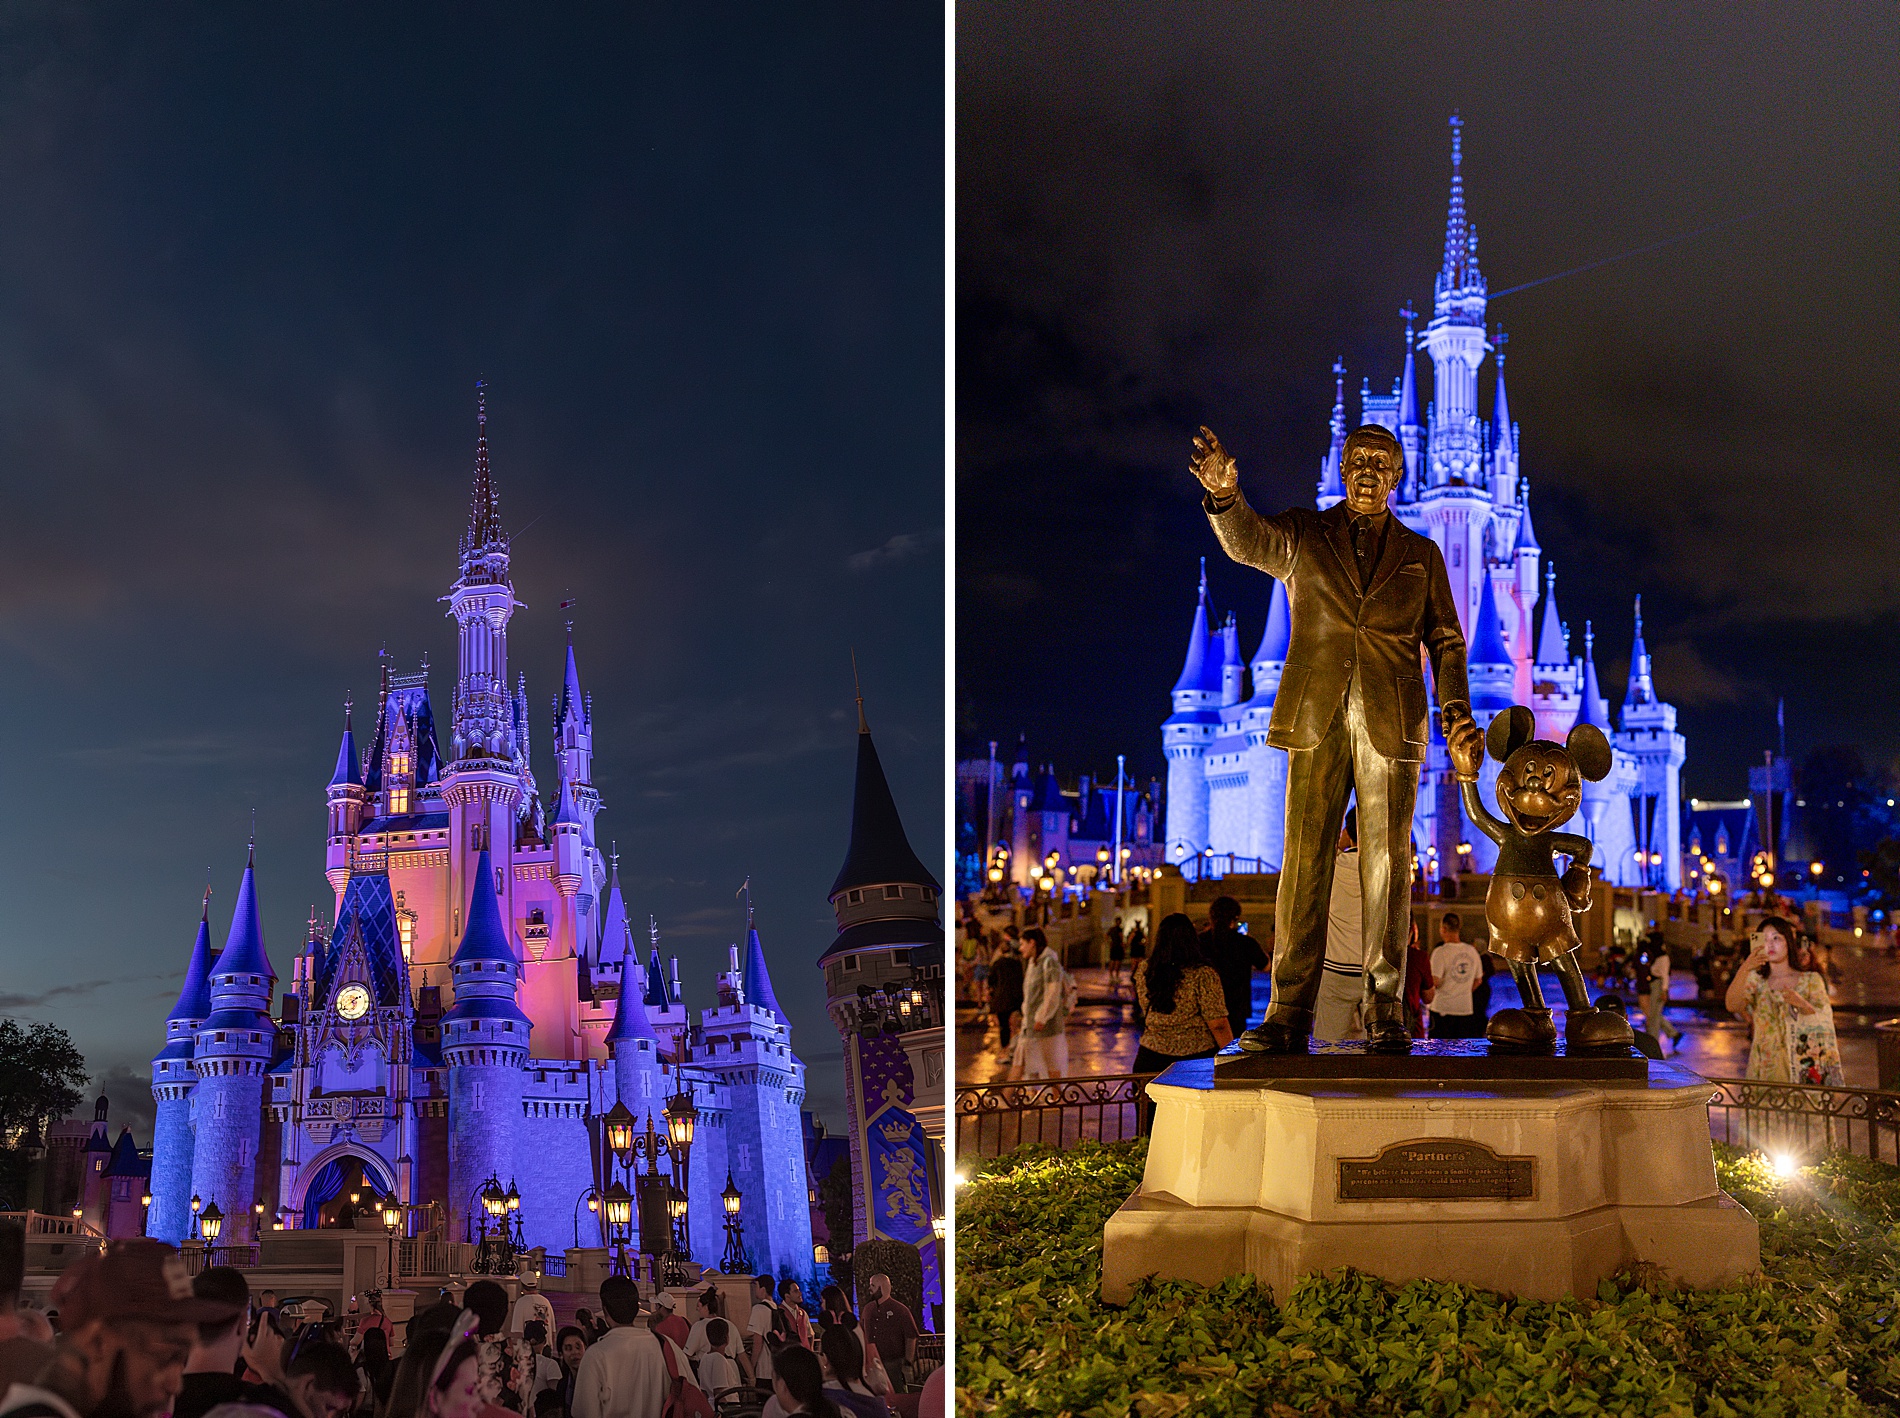 Disney Castle lit up at night